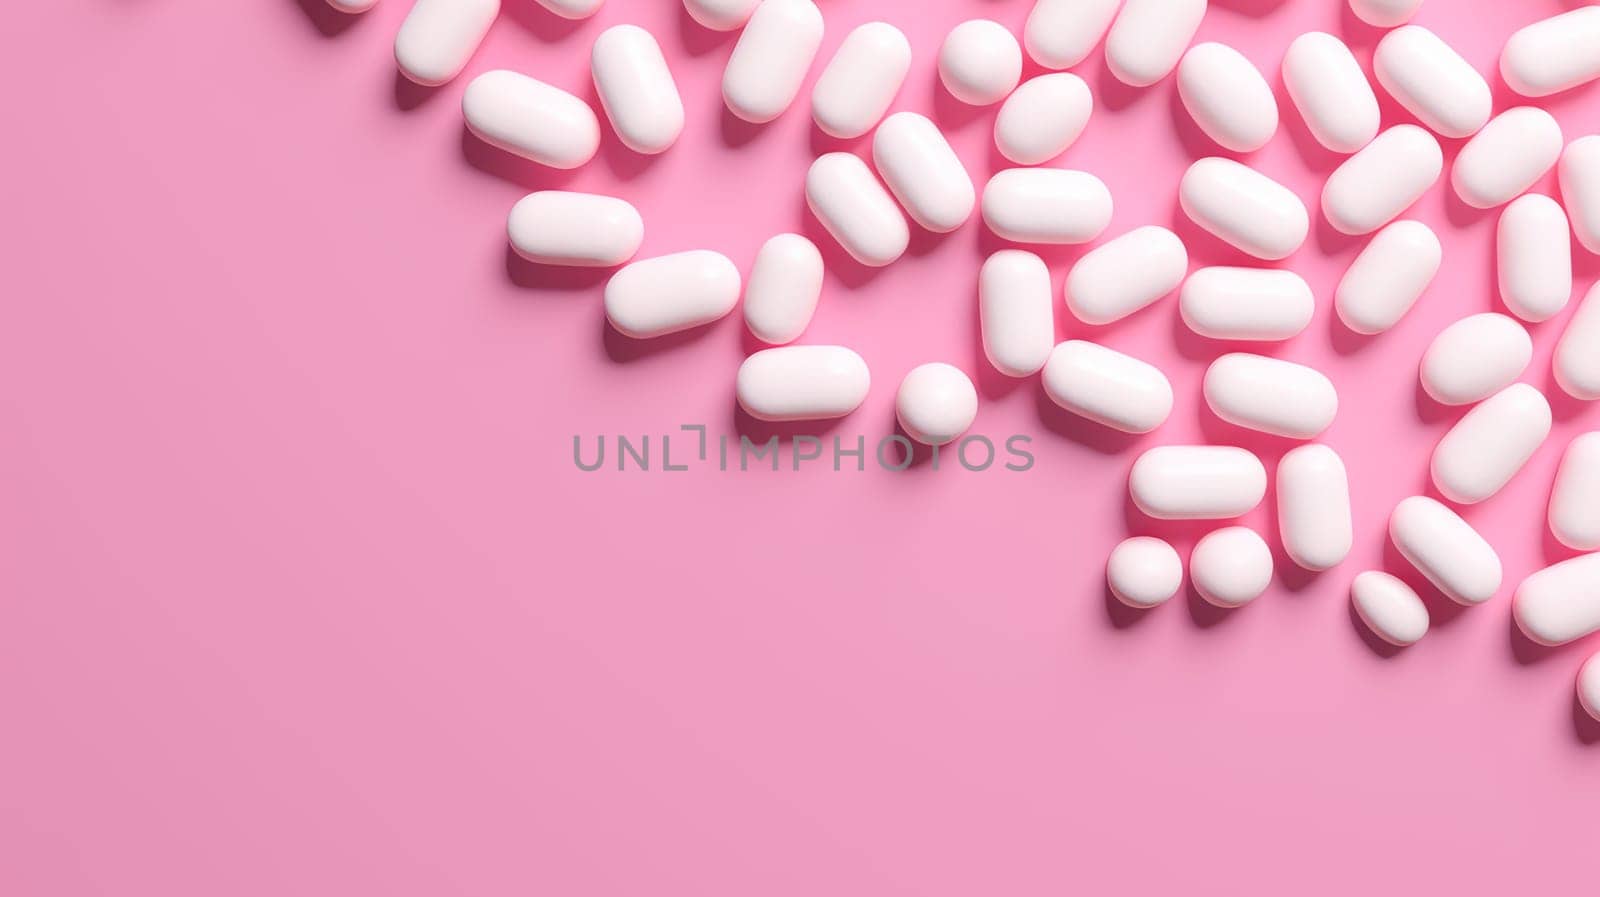 White pills on a pink background. by Alla_Yurtayeva